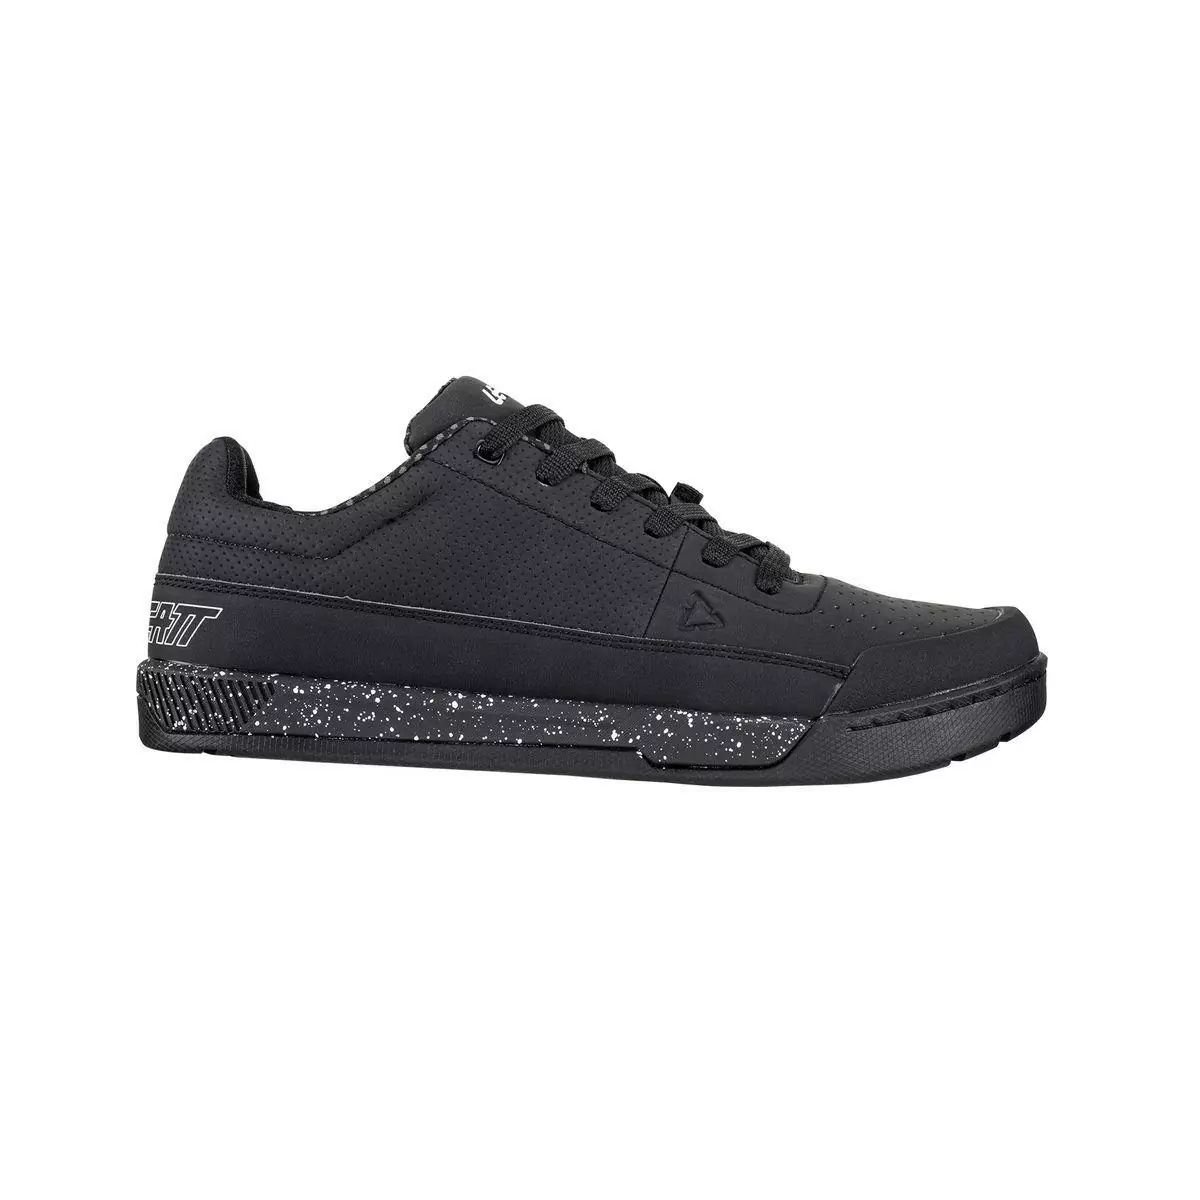 Mtb Shoes 2.0 Flat Black Size 40 - image